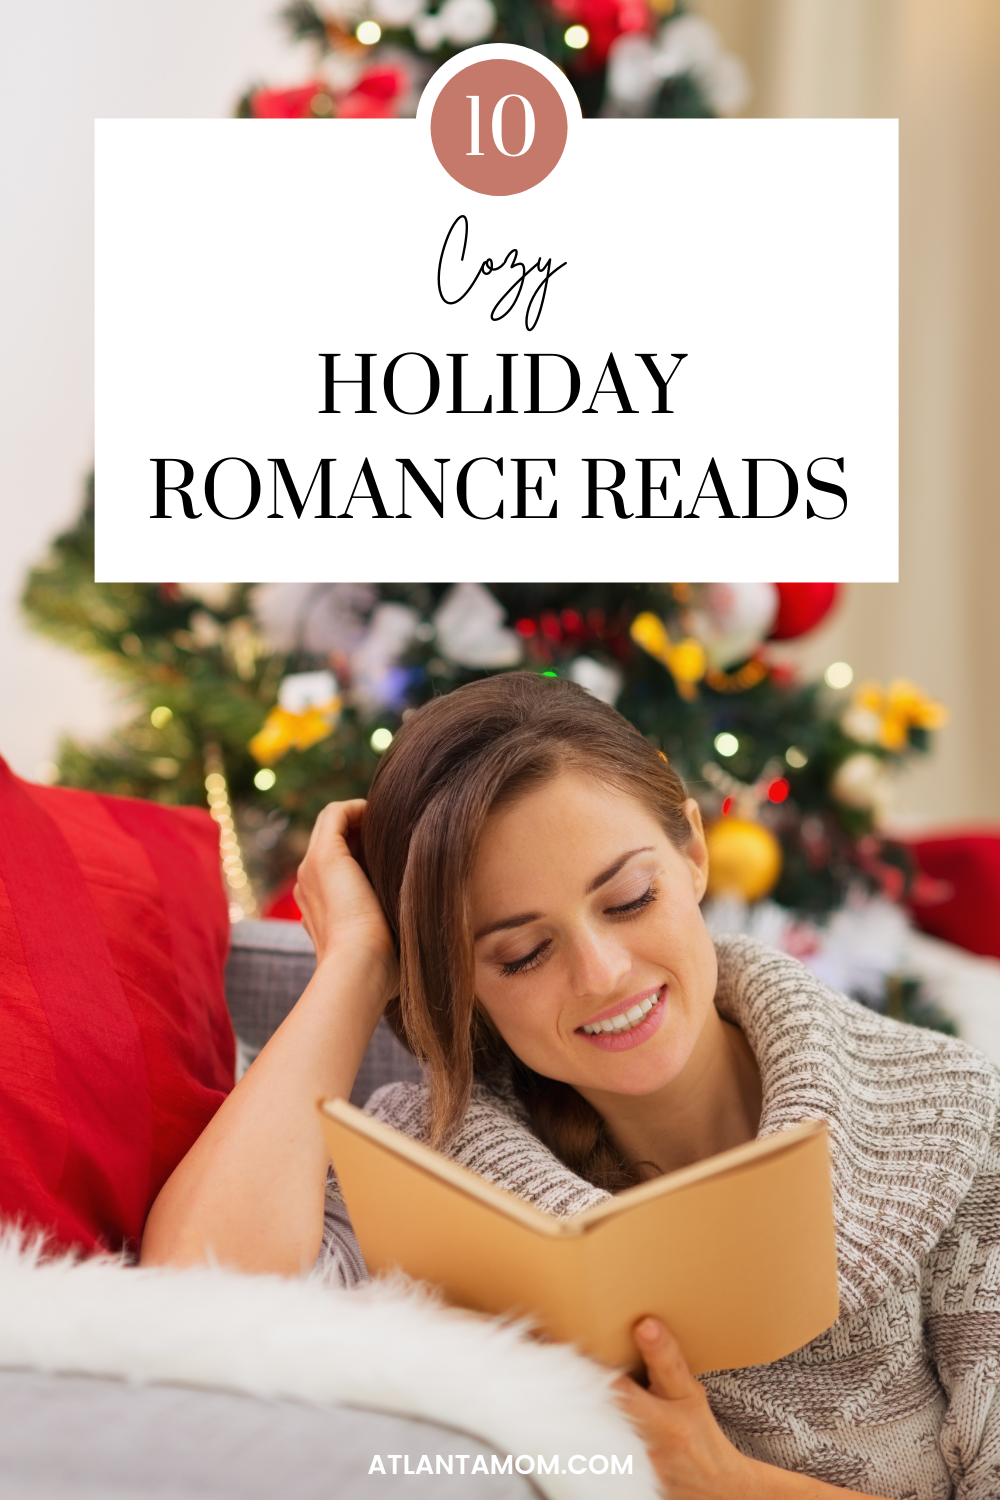 Christmas Hallmark Love Story or Romance Reads